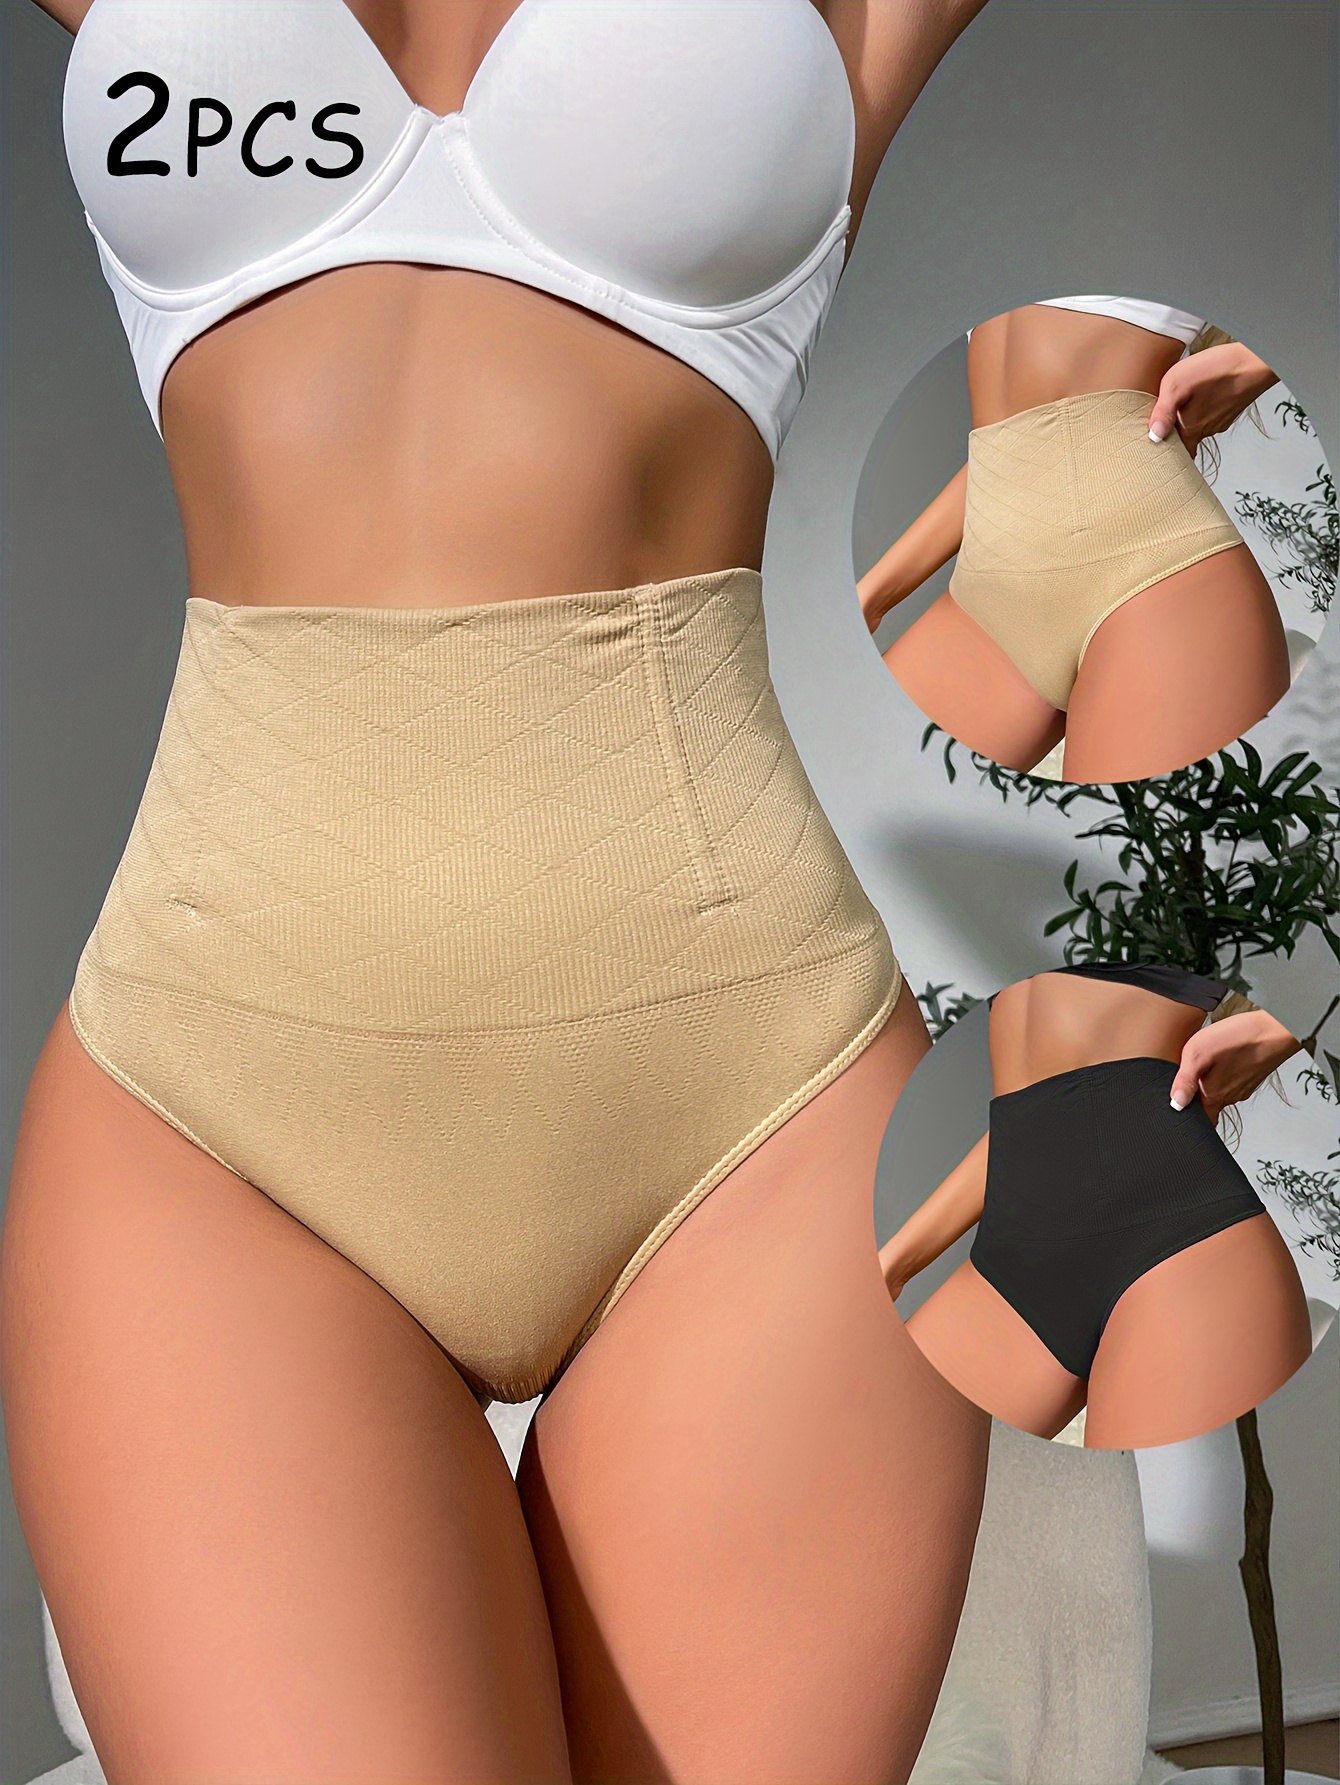 2pcs Argyle High Waist Thongs, Soft & Comfy Stretchy Intimates Panties,  Women's Lingerie & Underwear